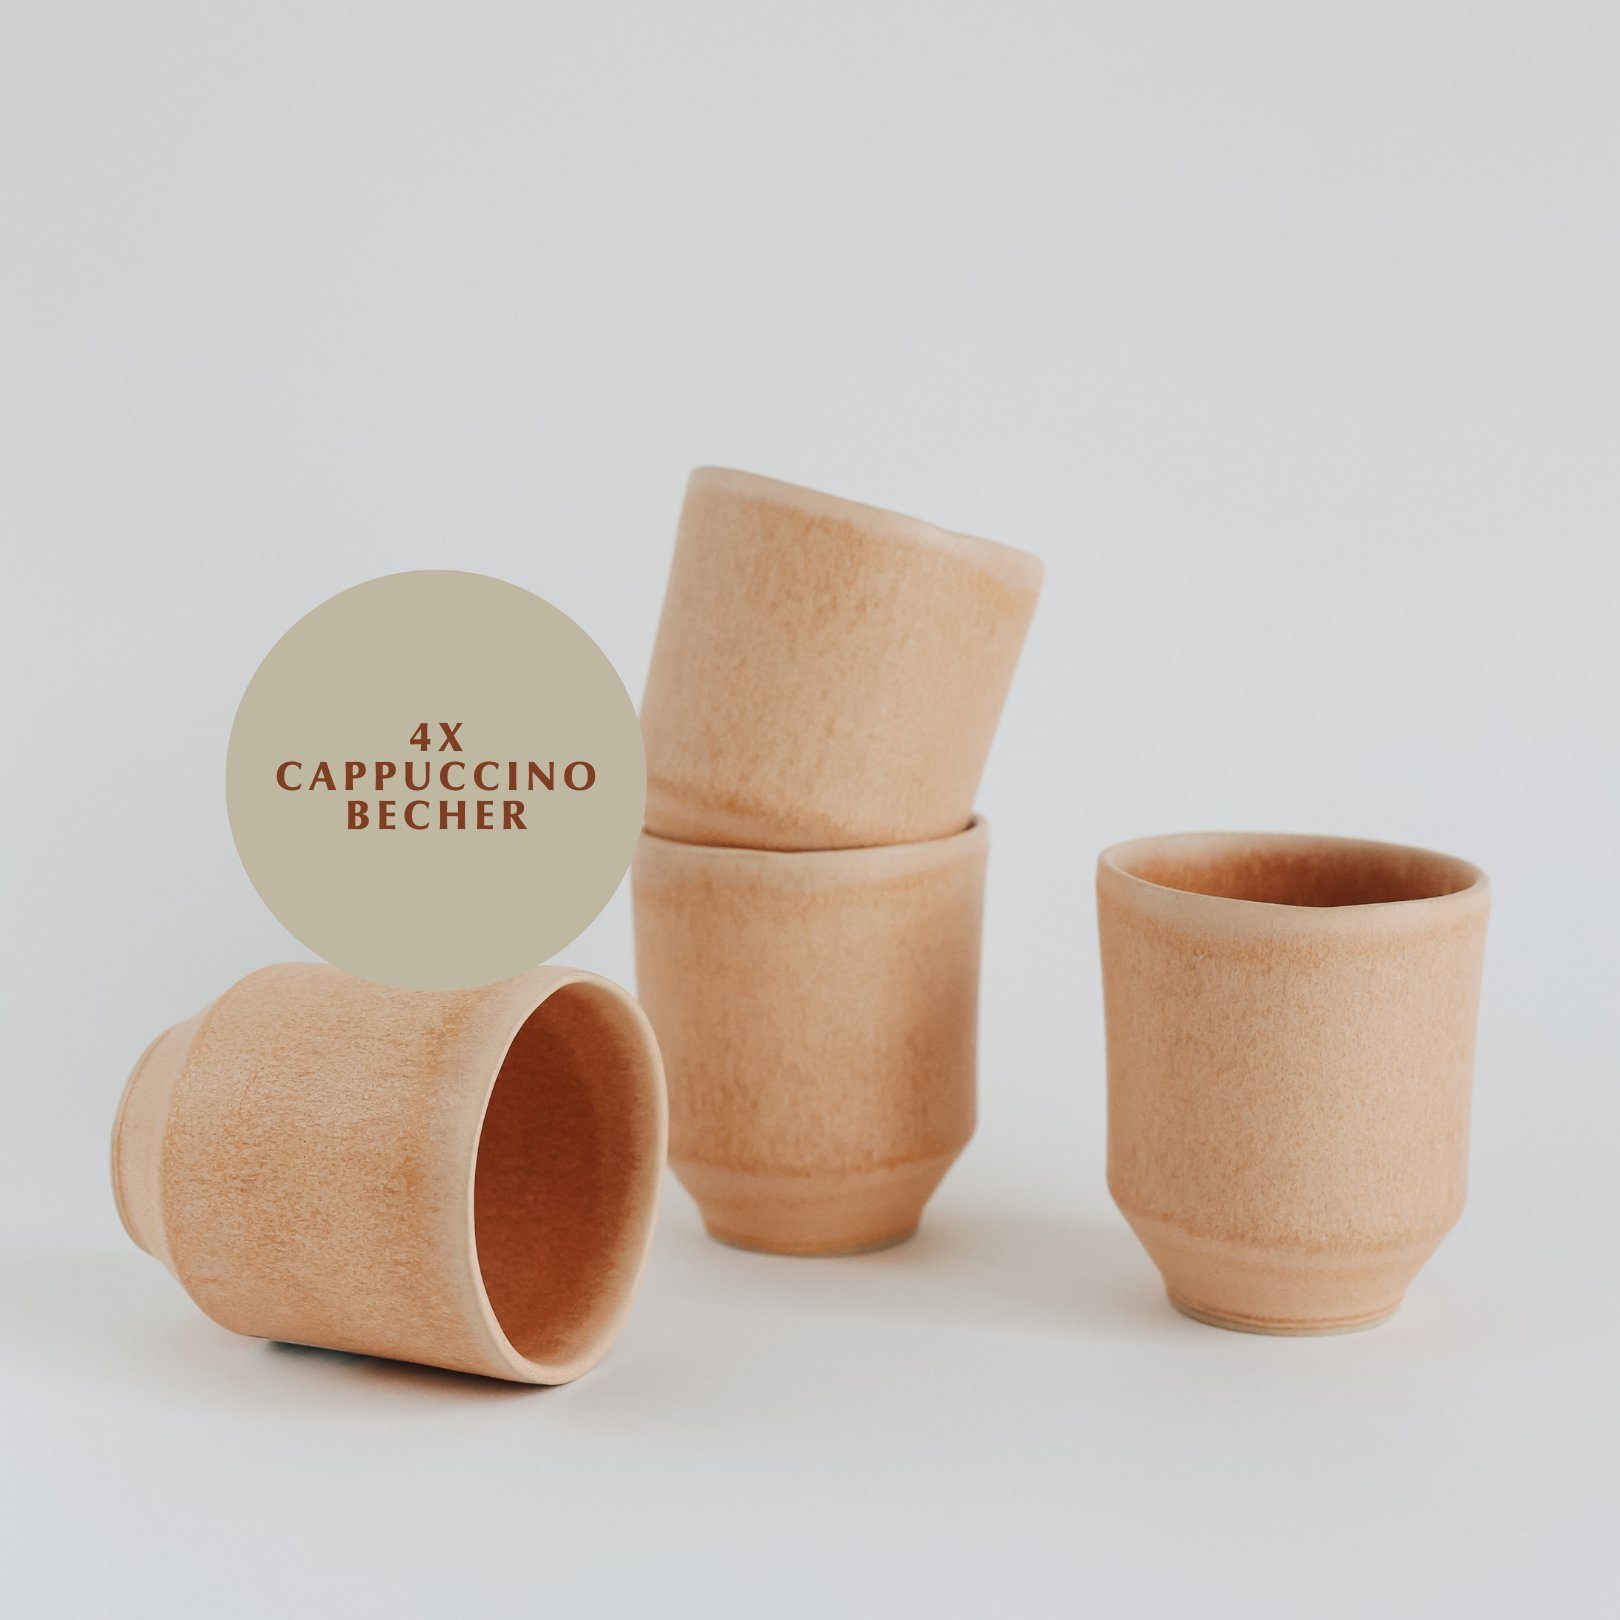 Keramik Cappuccino SunnyPeach NAKOA Cappuccino Set, Becher, Cappuccinotasse NAKOA 250ml 4er Tassen